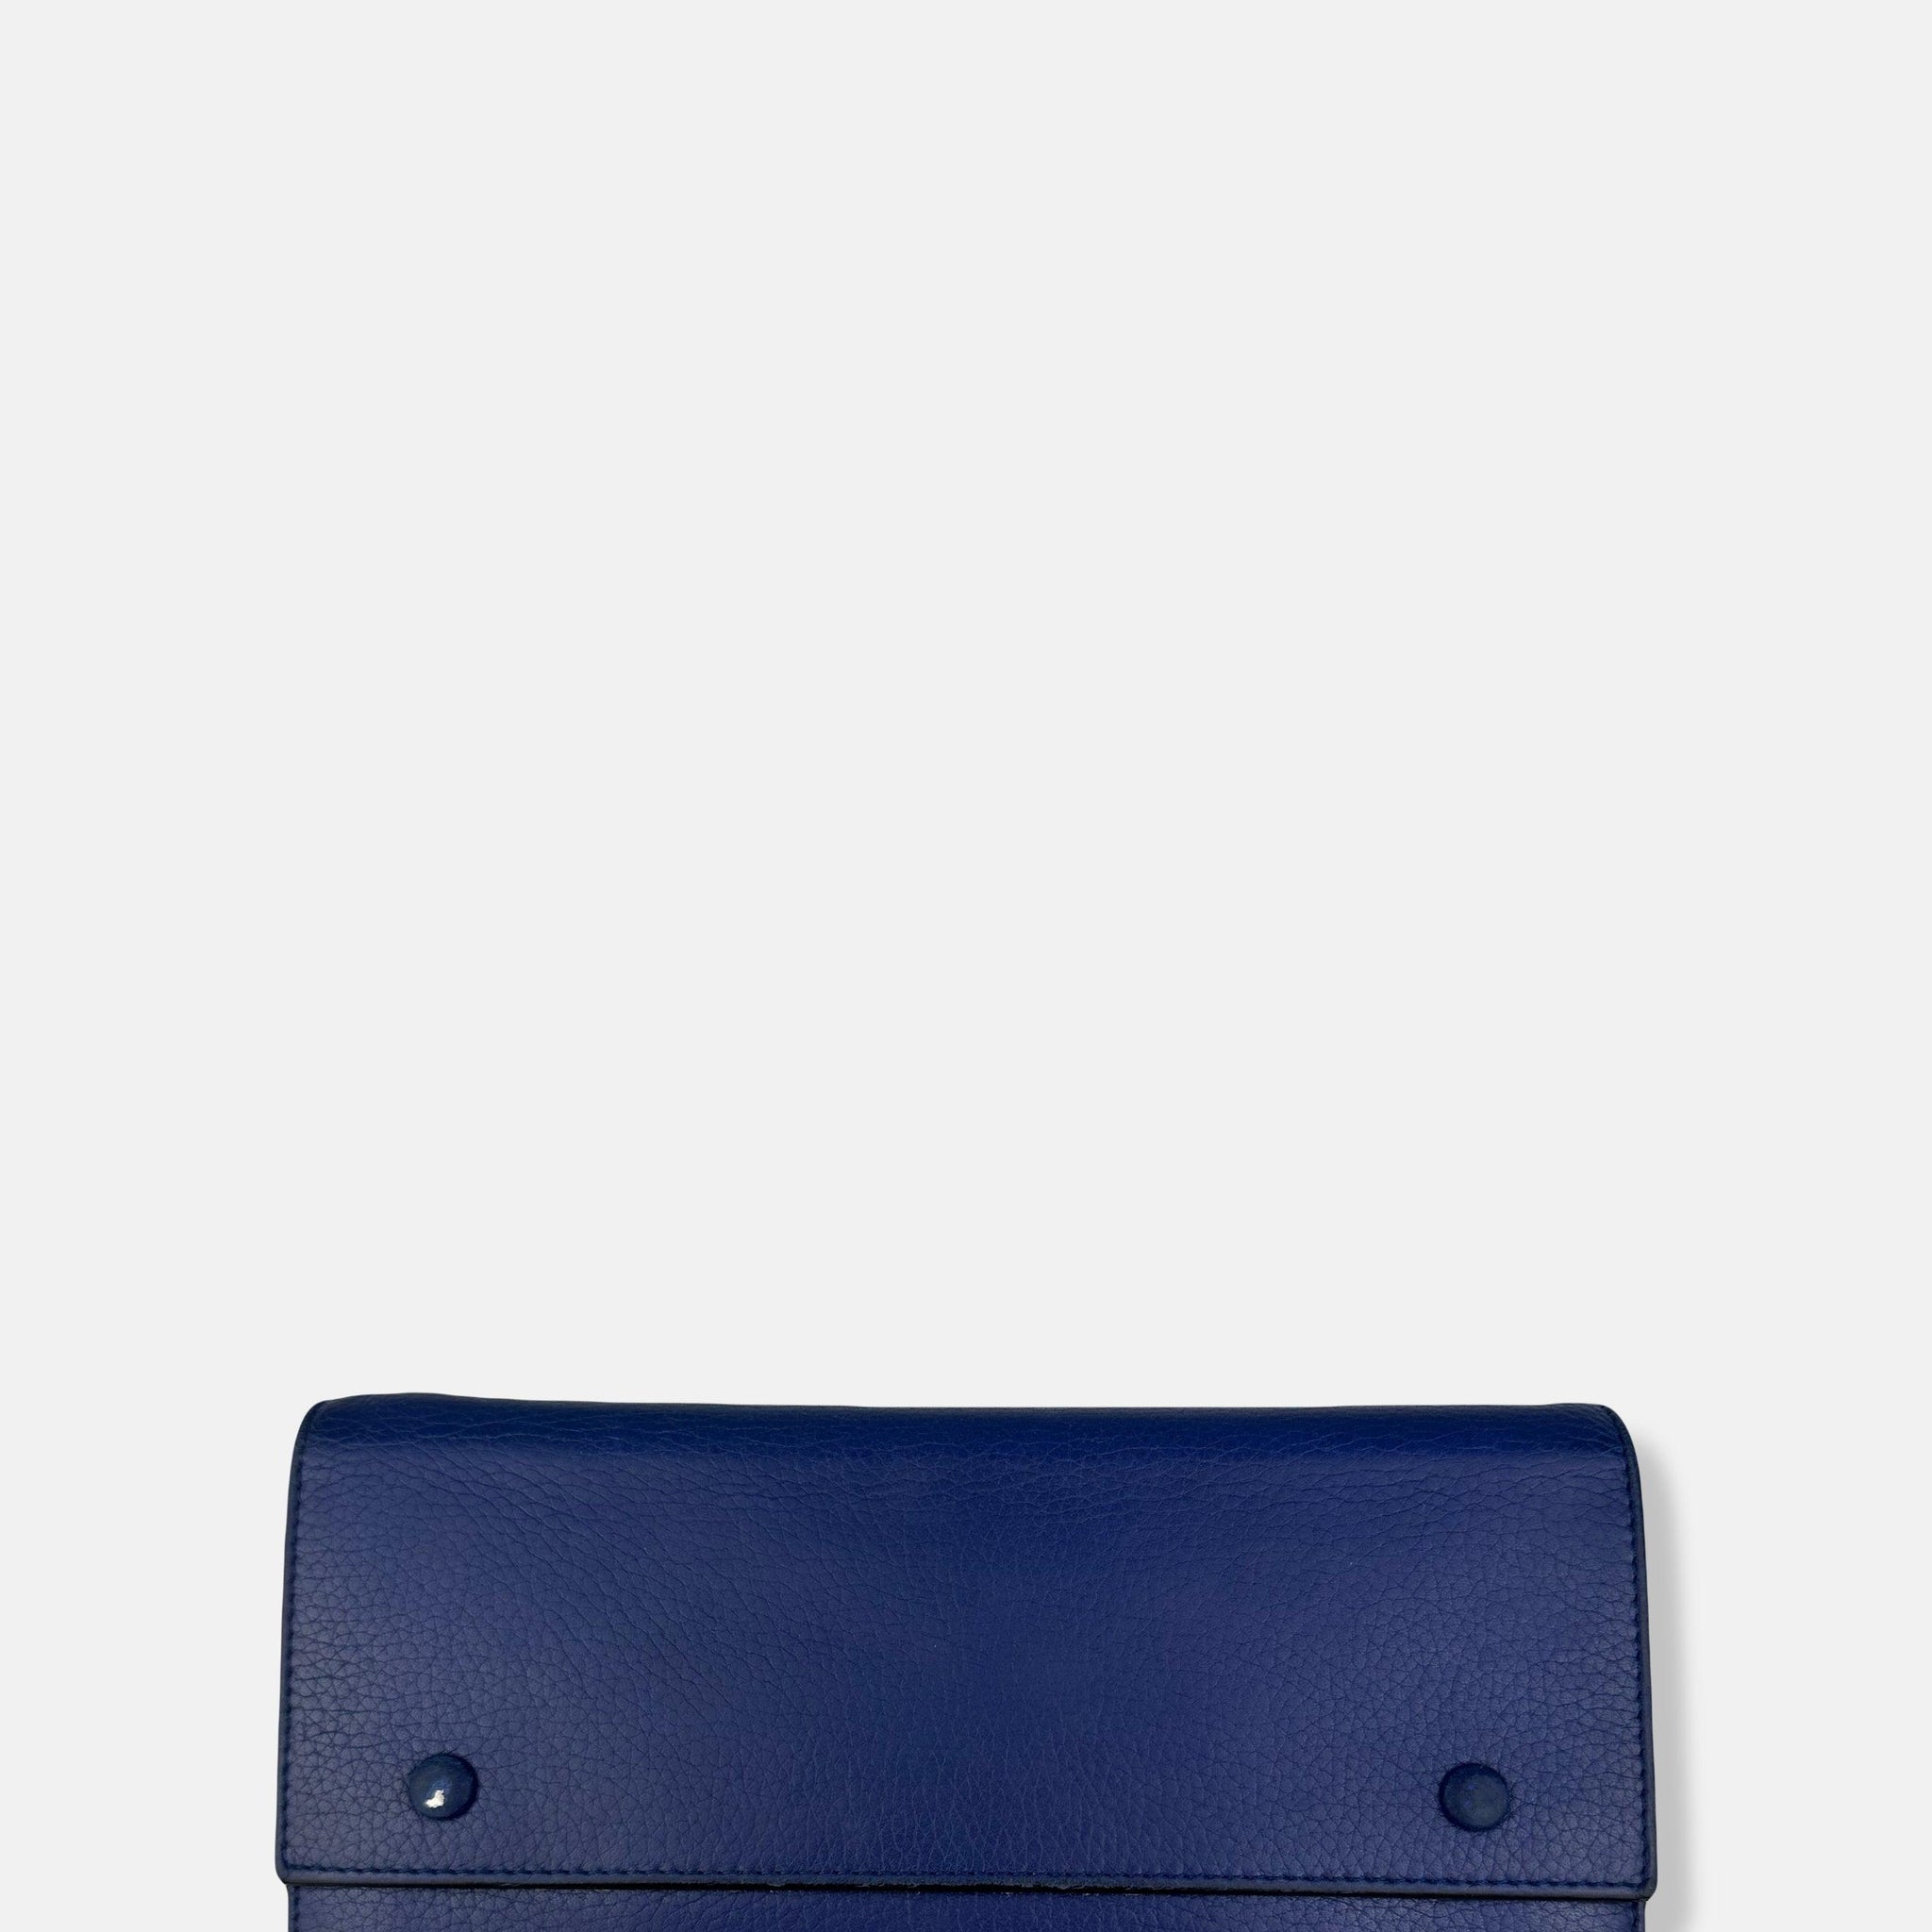 Blue Leather Multi-Compartment Purse - Zage Vintage